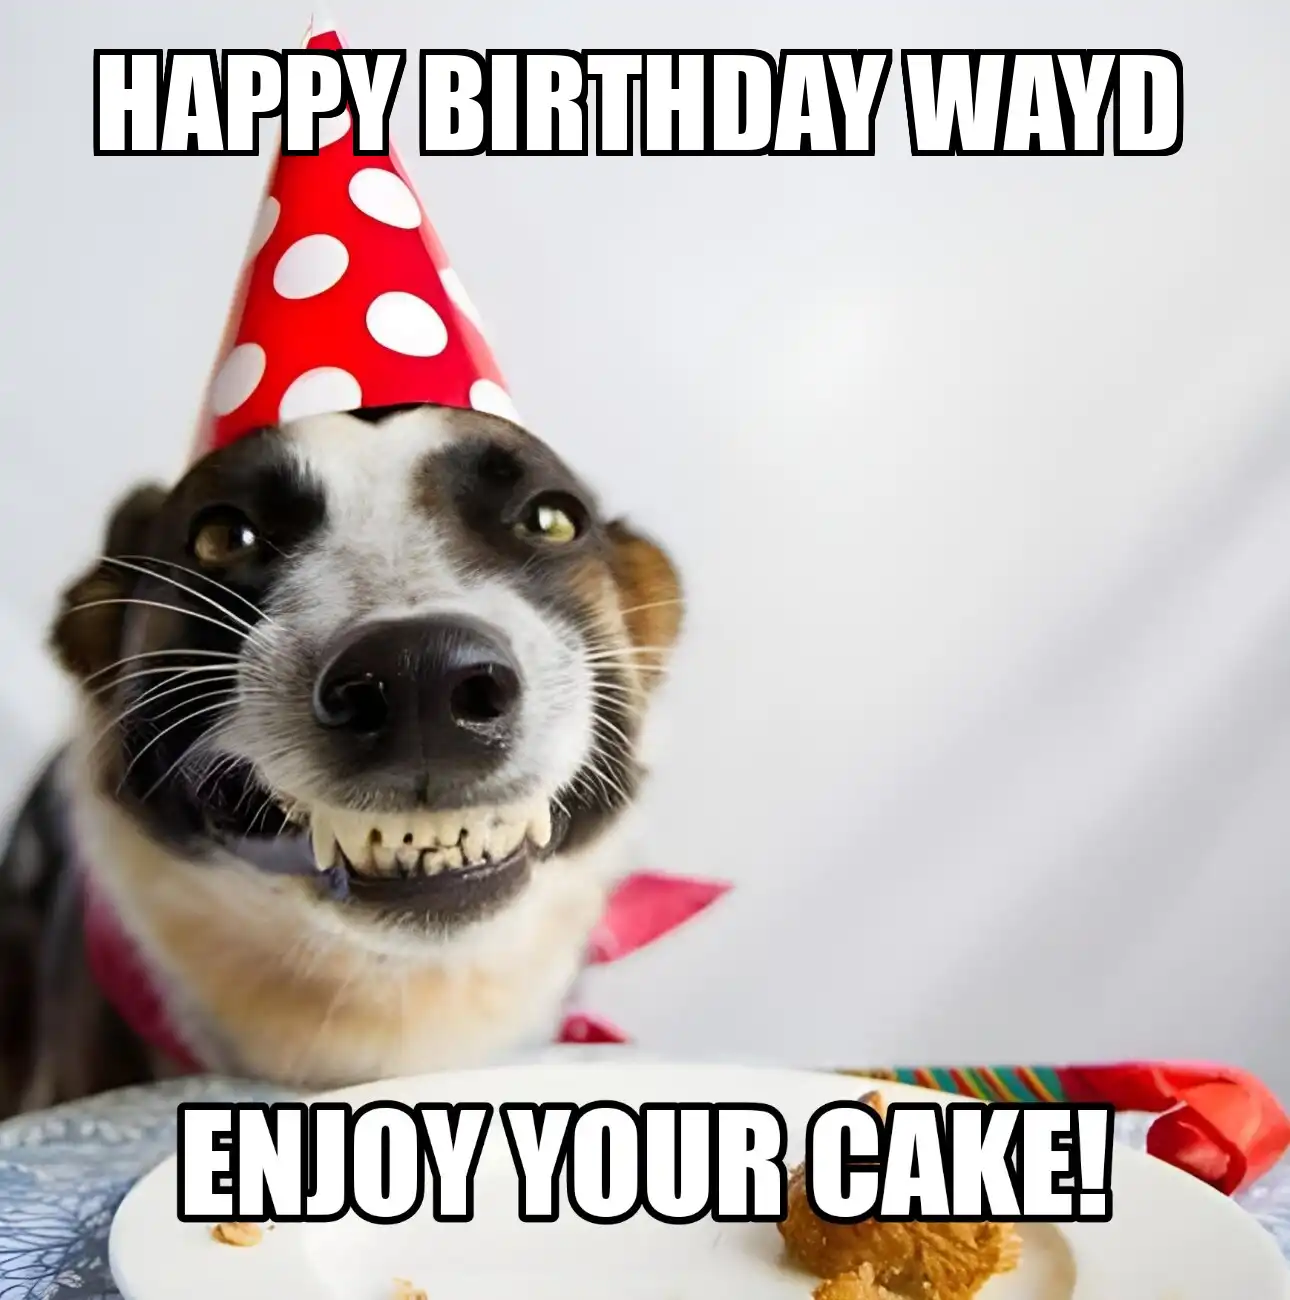 Happy Birthday Wayd Enjoy Your Cake Dog Meme